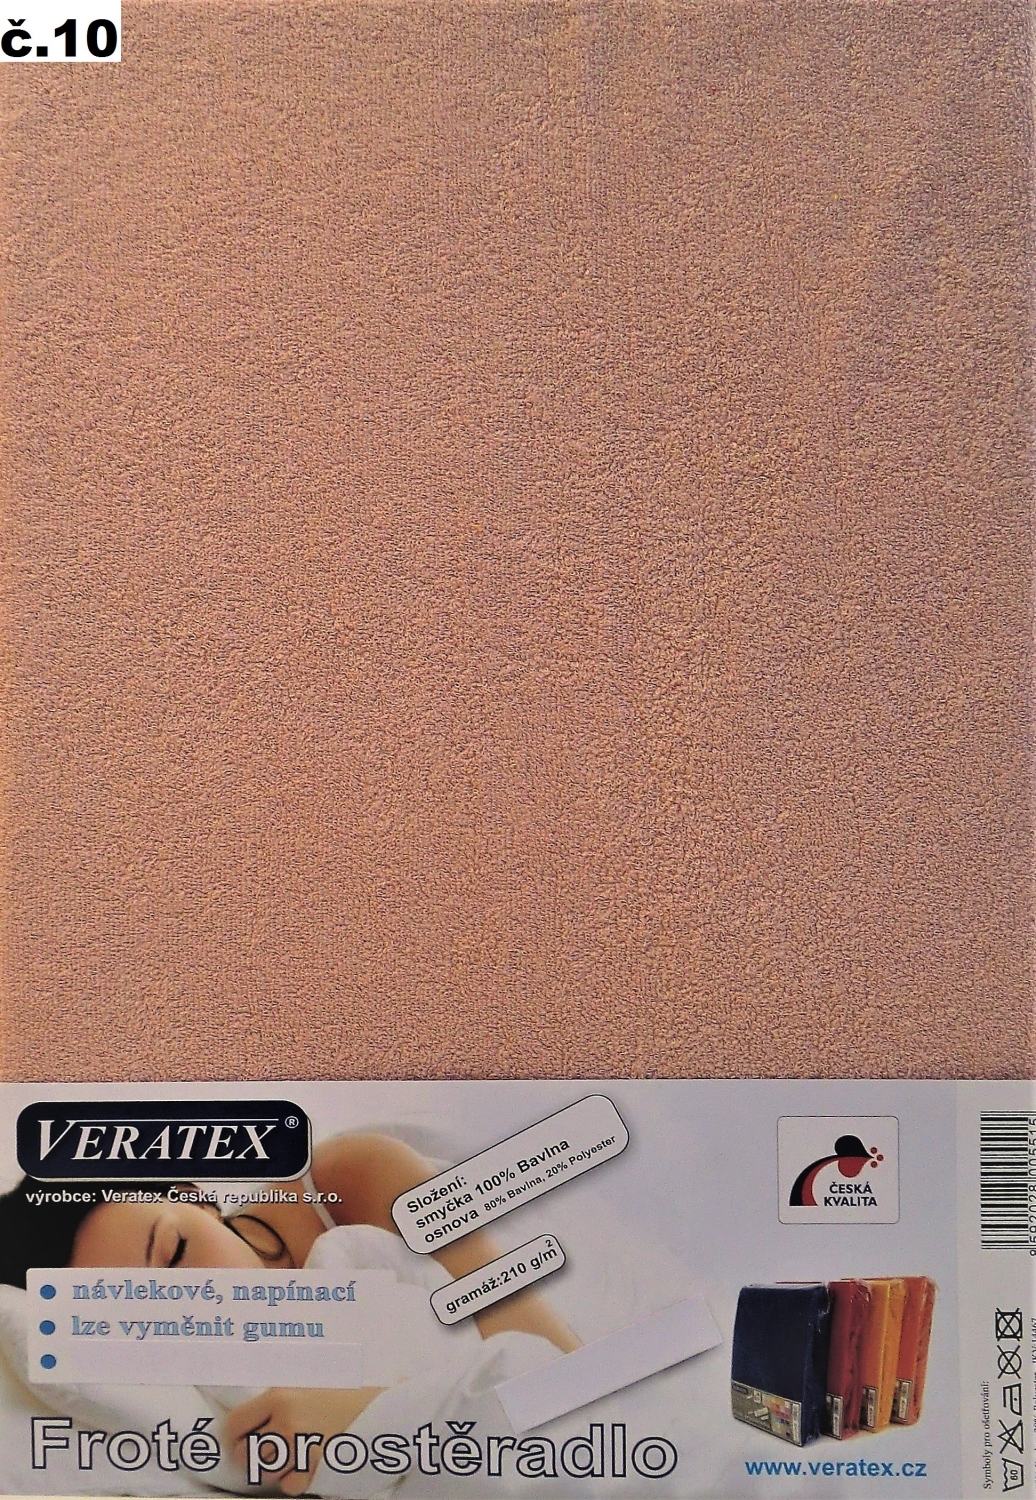 Veratex Froté prostěradlo 180x220/16 cm (č.10-starorůžová)